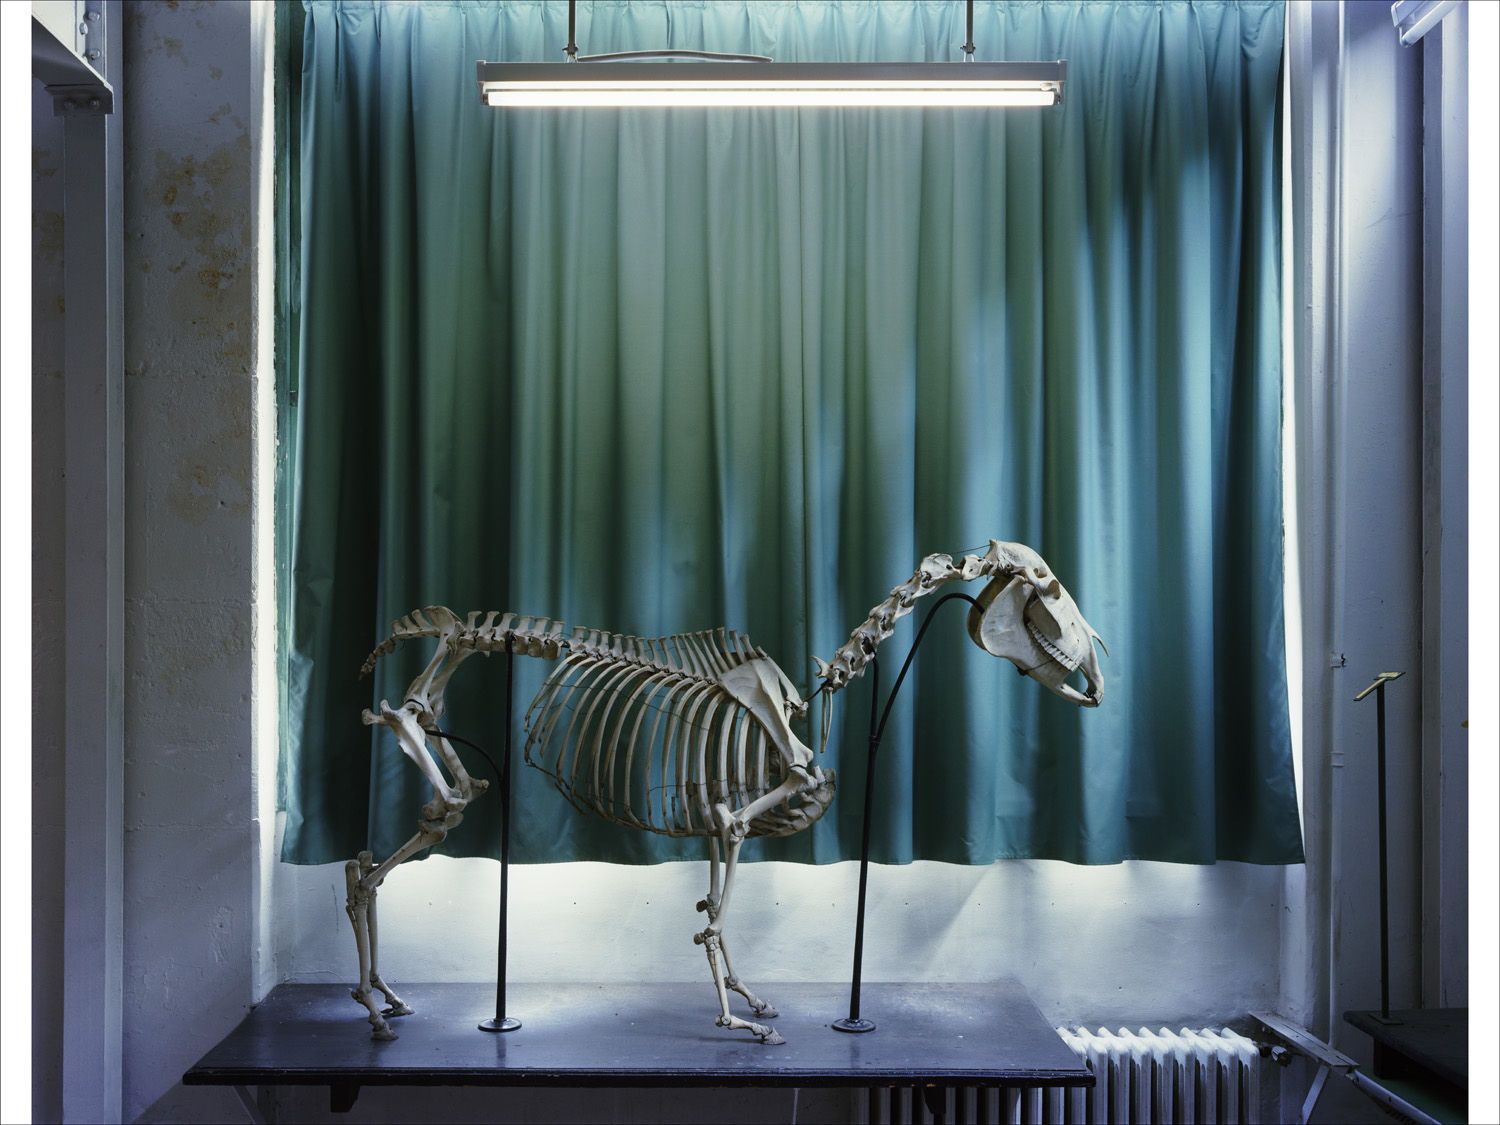  Horse 2005, Musee Fragonard, Paris 